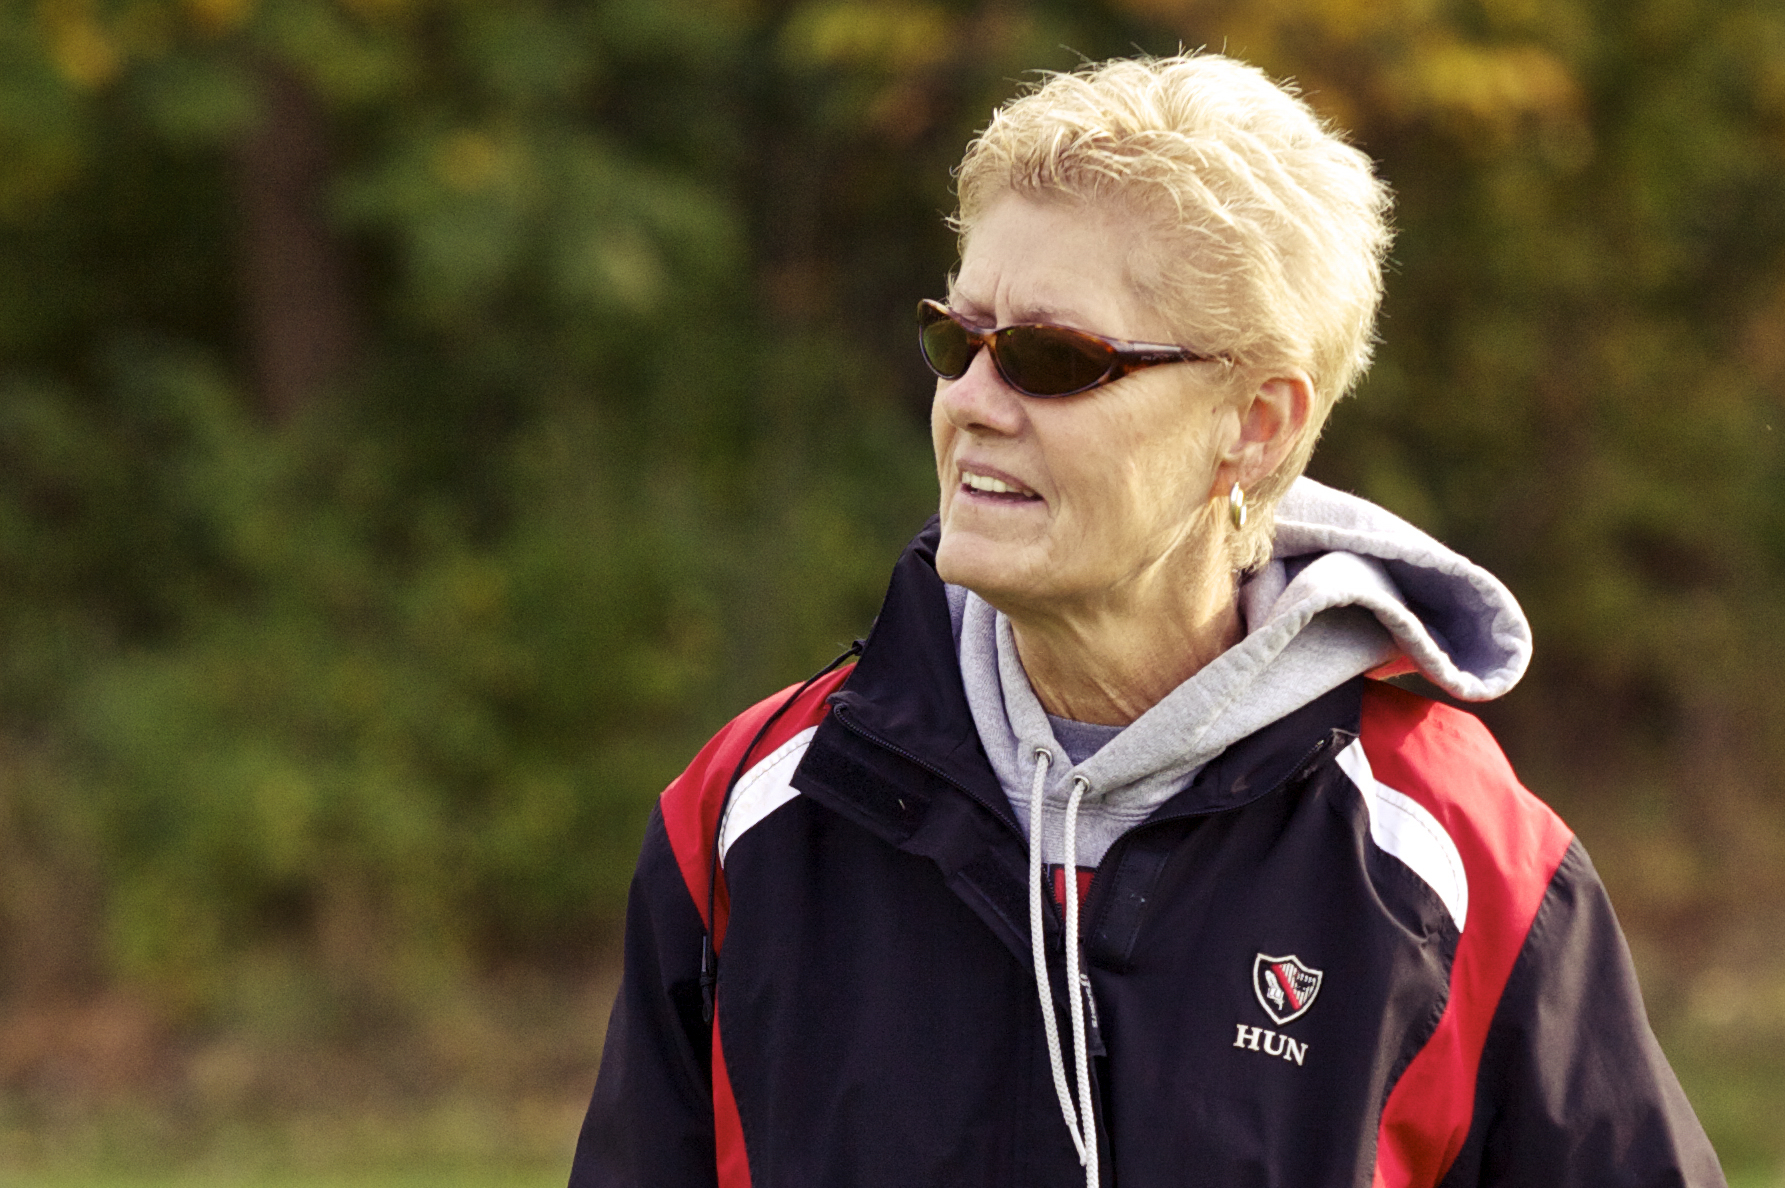 Hun School Varsity Softball Coach Kathryn Quirk celebrates 40 years of coaching.